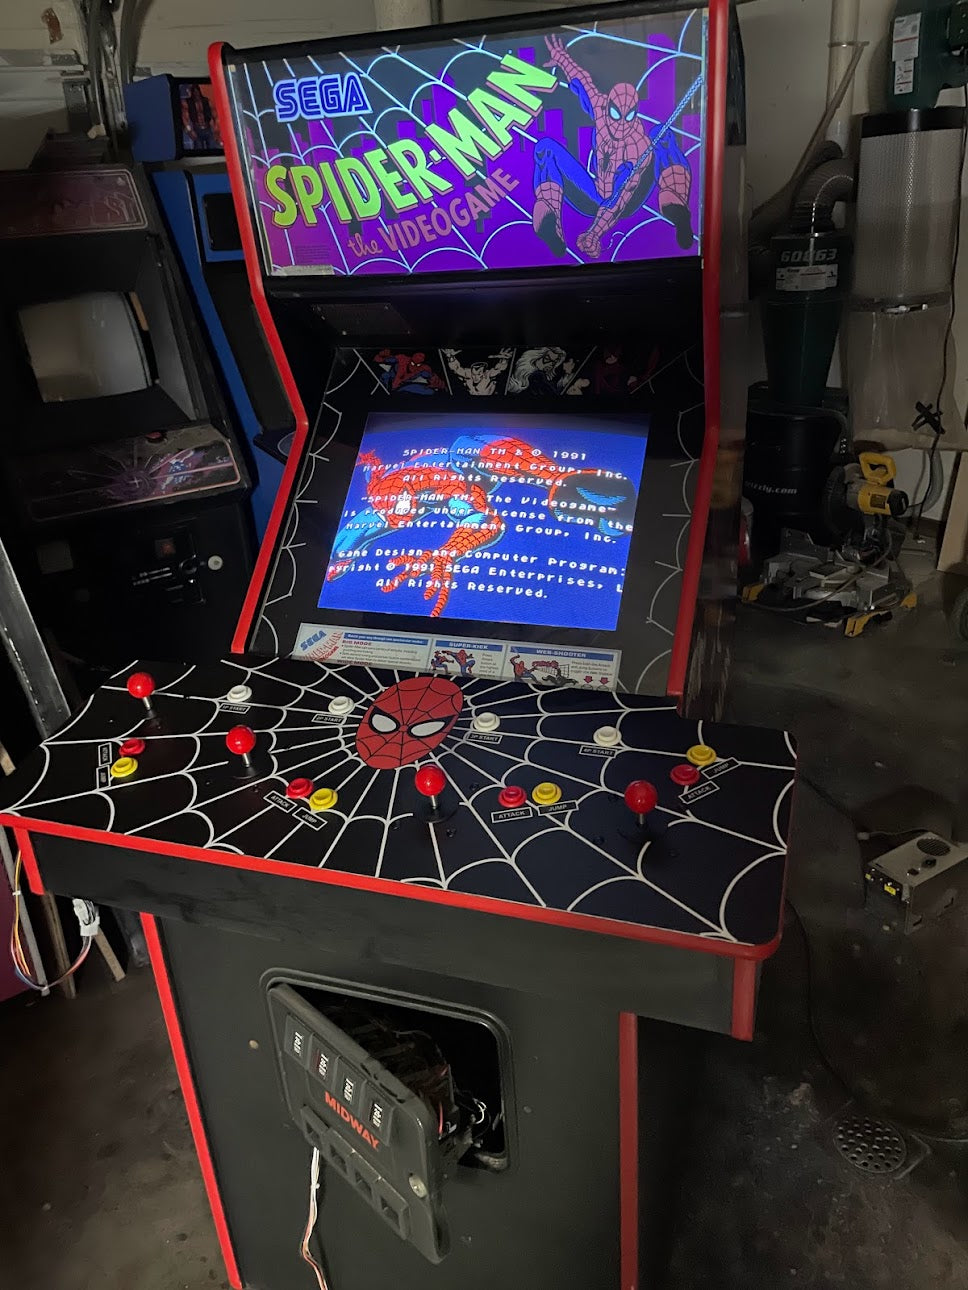 Sega Spiderman (4 Player) Control Panel